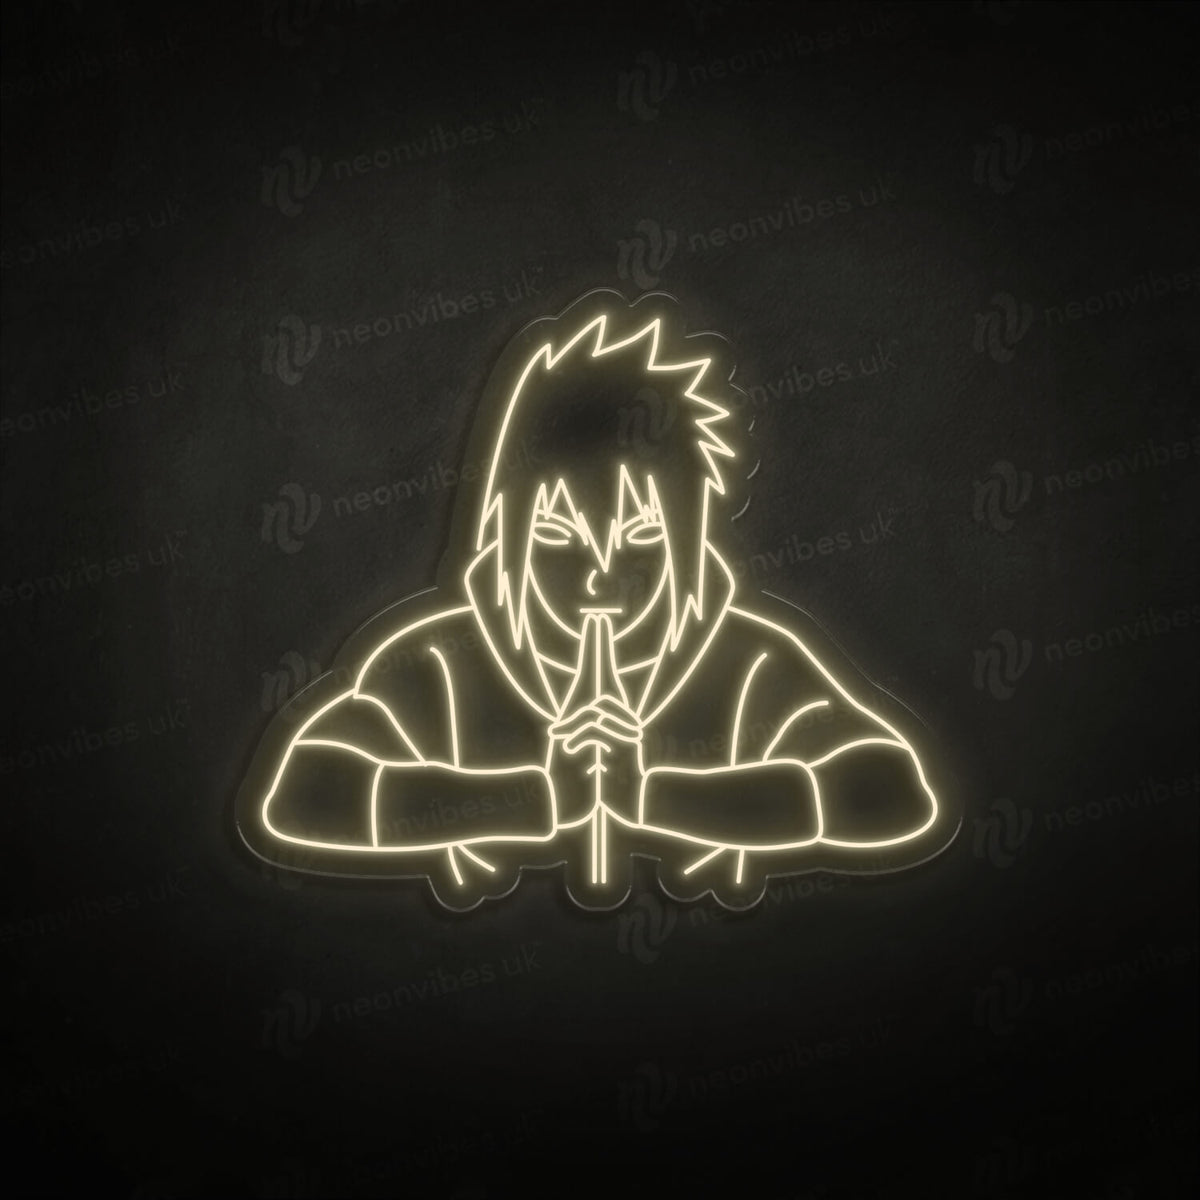 Sasuke neon sign